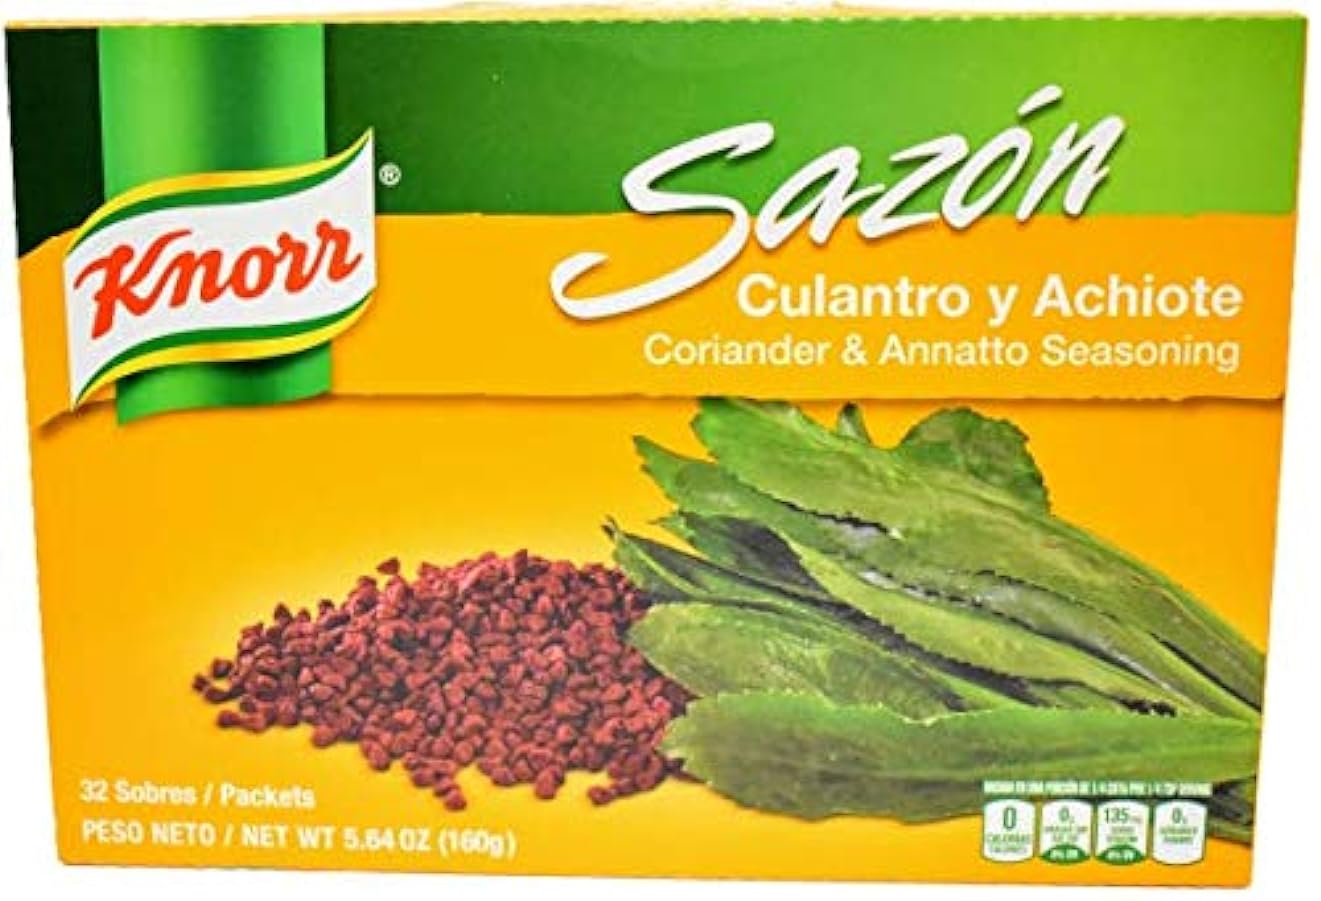 Knorr Sazon Seasoning, Coriandolo & Annatto, Culantro y Achiote, 5,6 oz, 32 ct 605183368